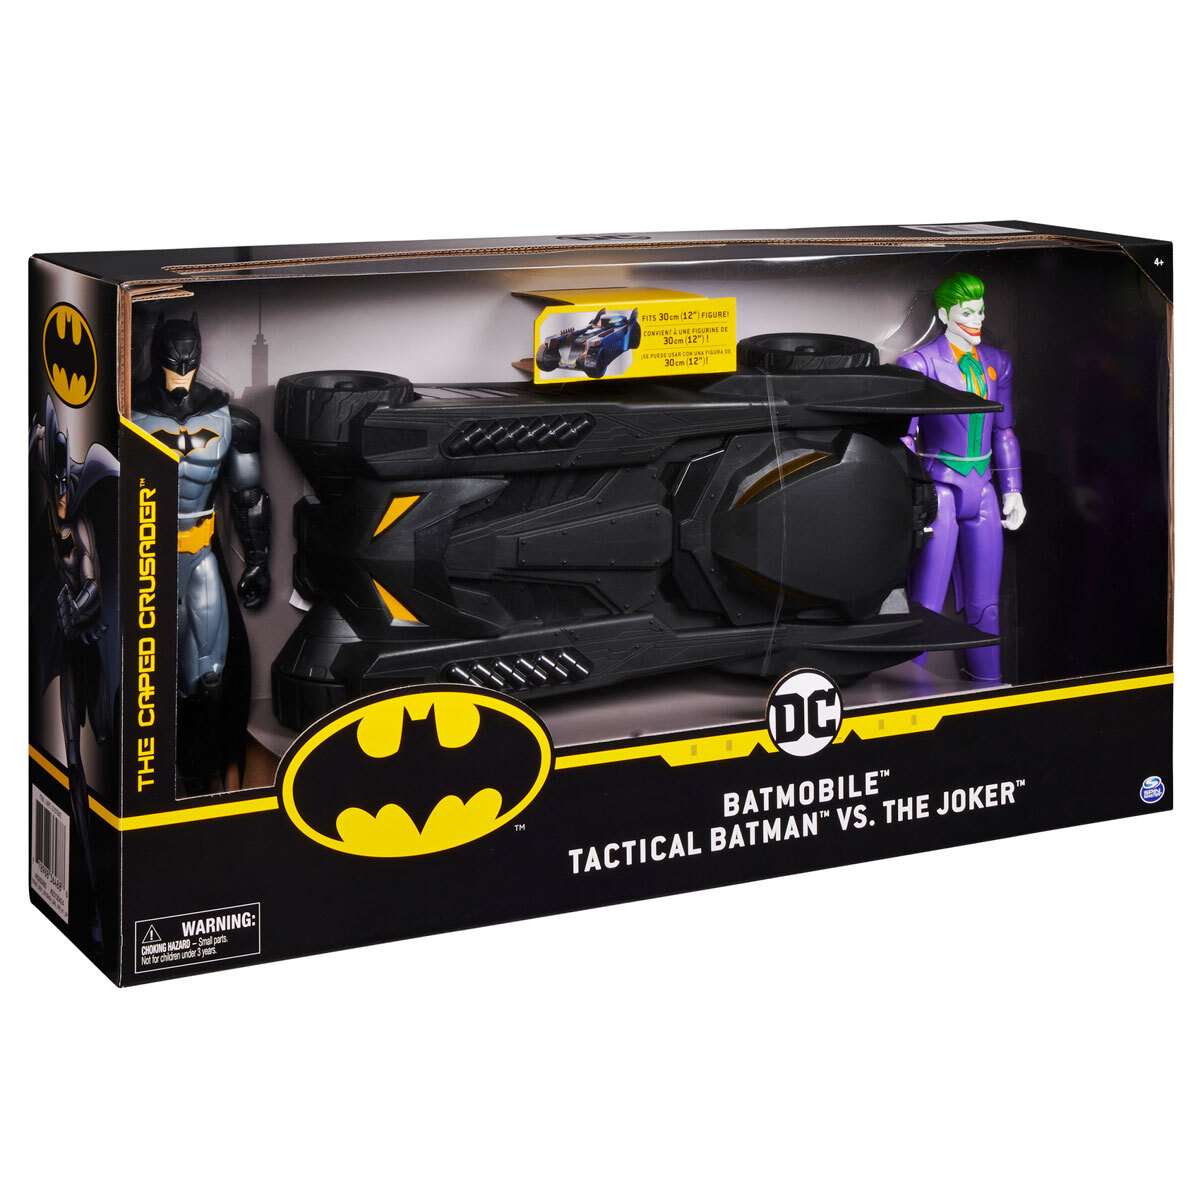 Batman, Harley and Batmobile boxed image